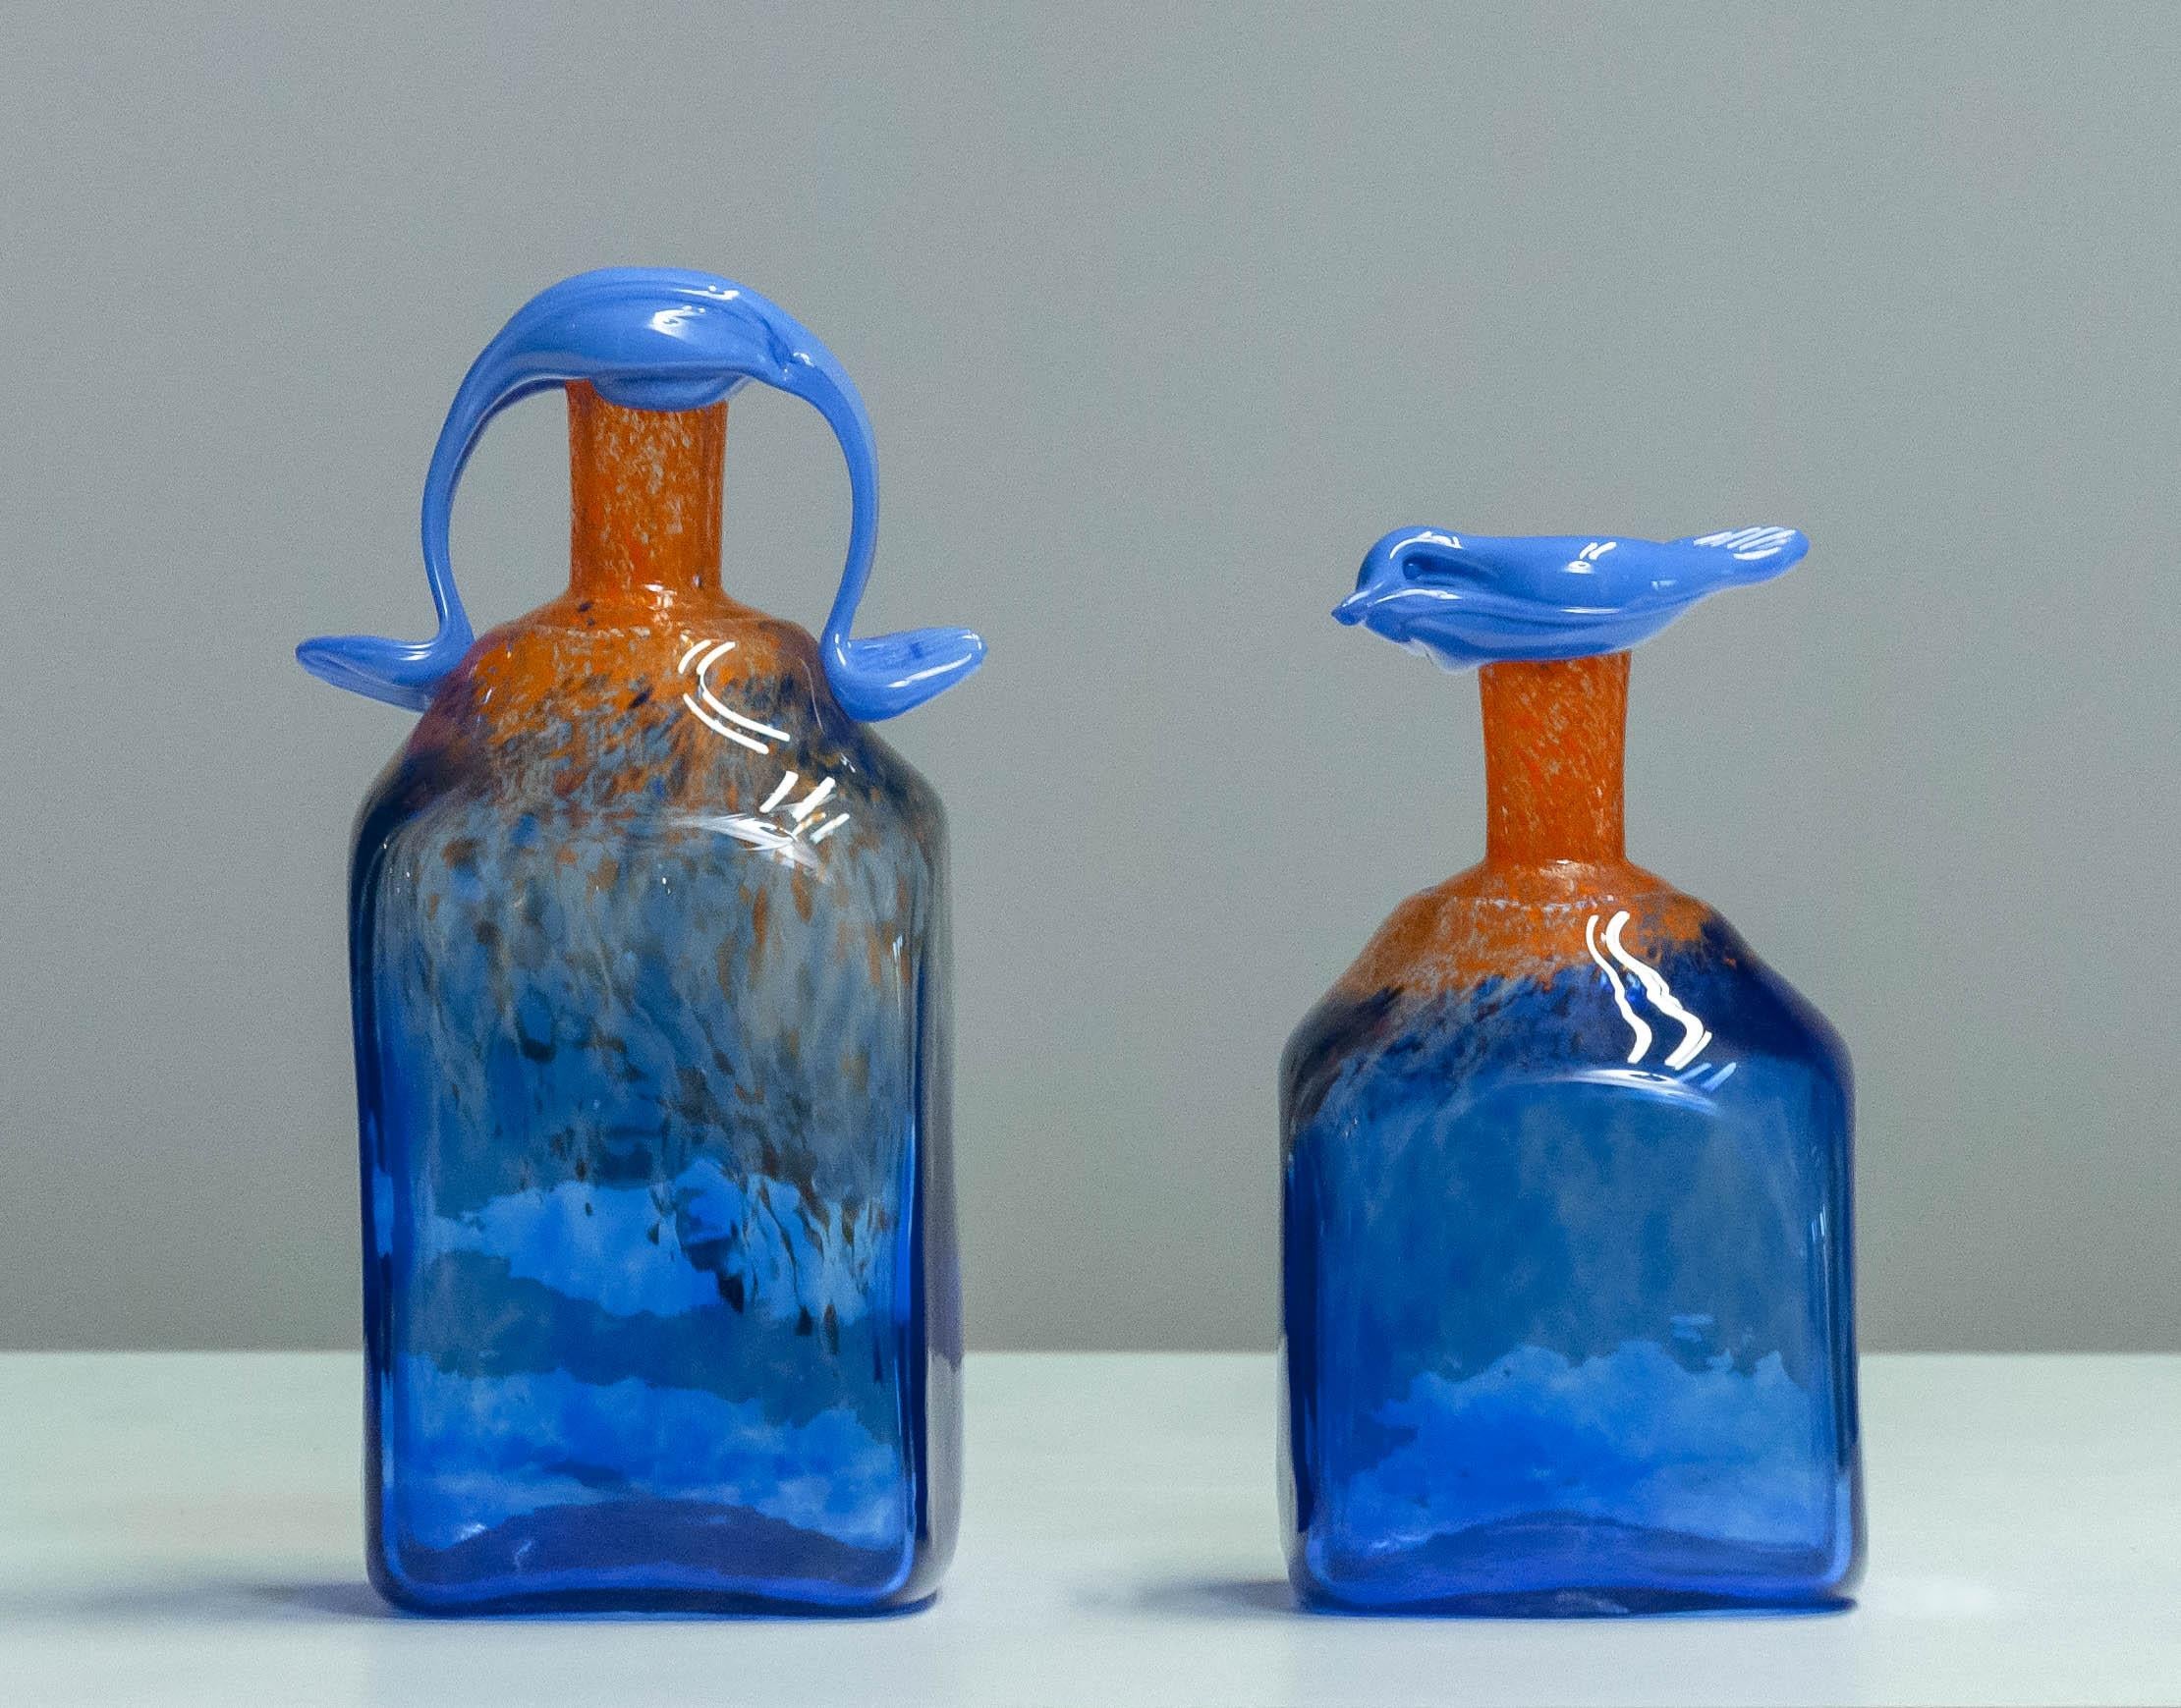 1980s Blue Art Glass Bottle Handmade by Staffan Gellerstedt at Studio Glashyttan For Sale 4